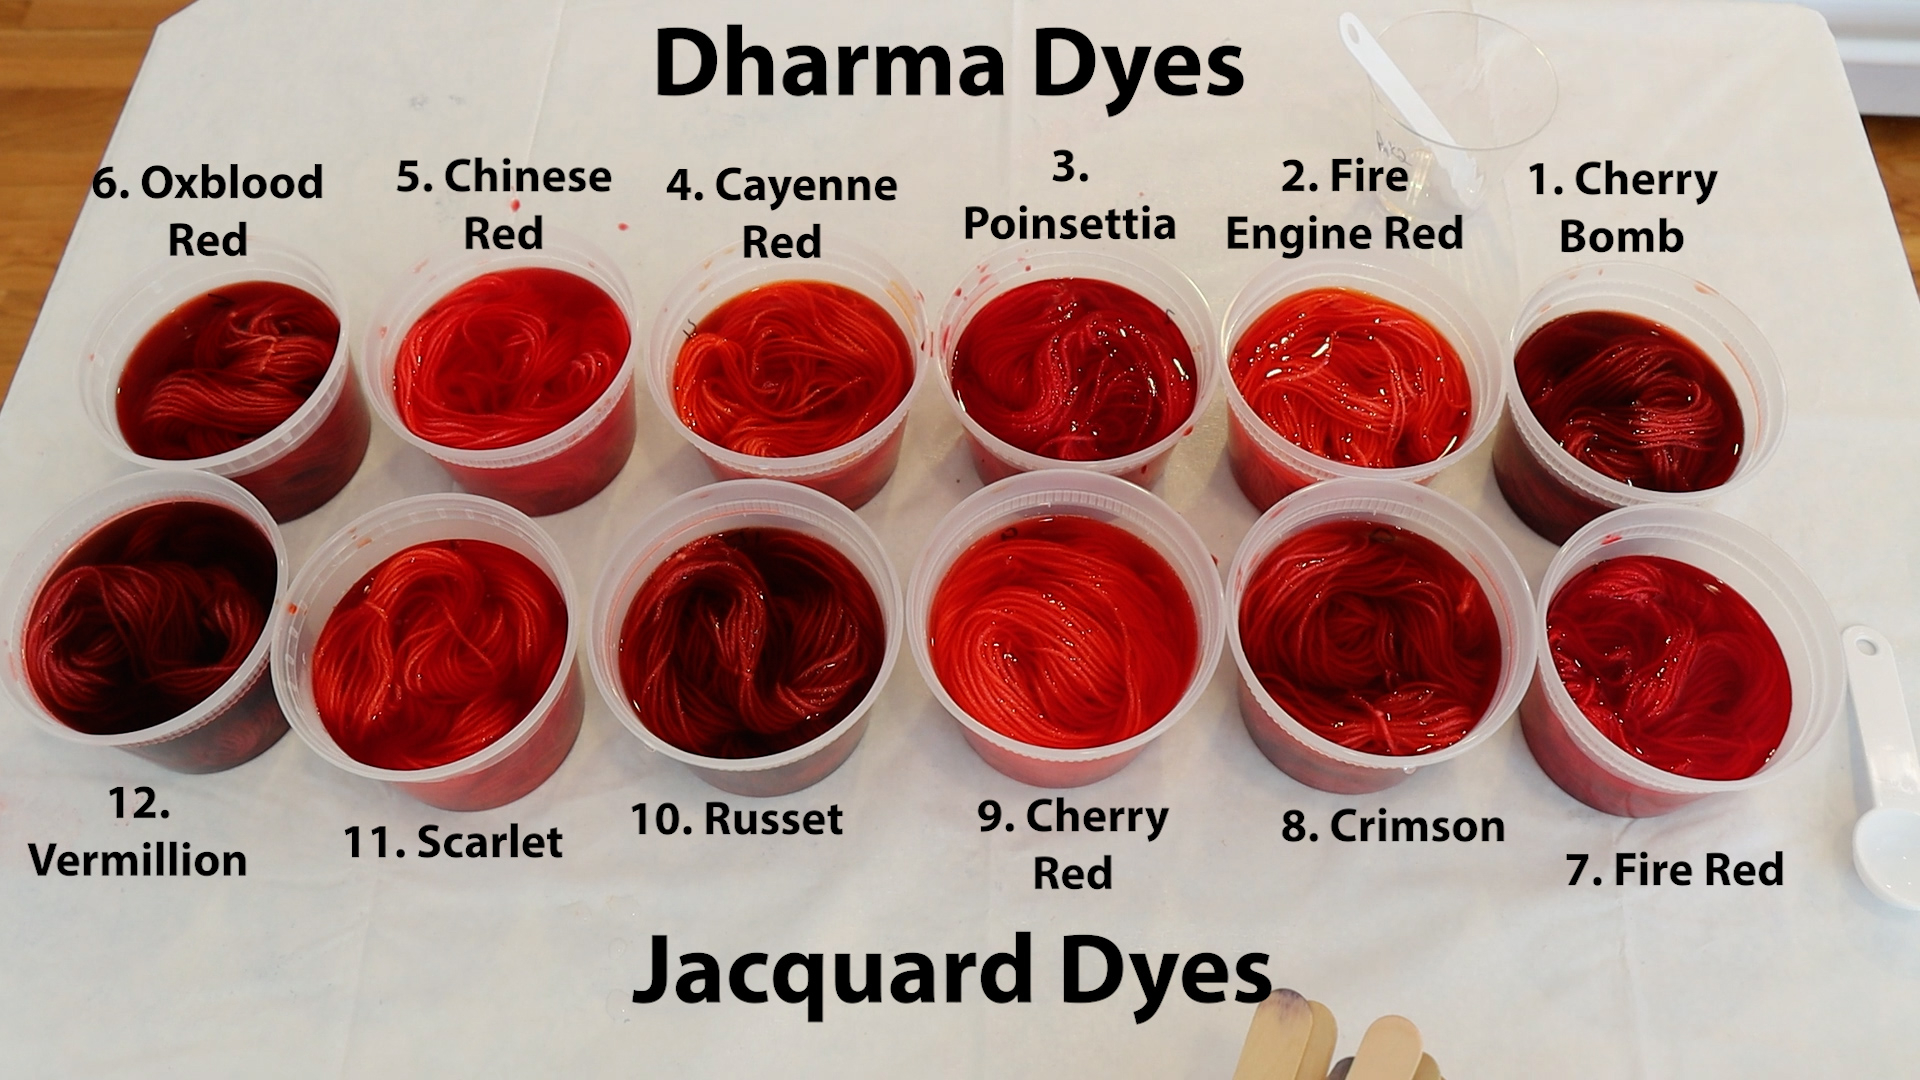 ChemKnits: Swatching Acid Dye Powders on Yarn, Part 2